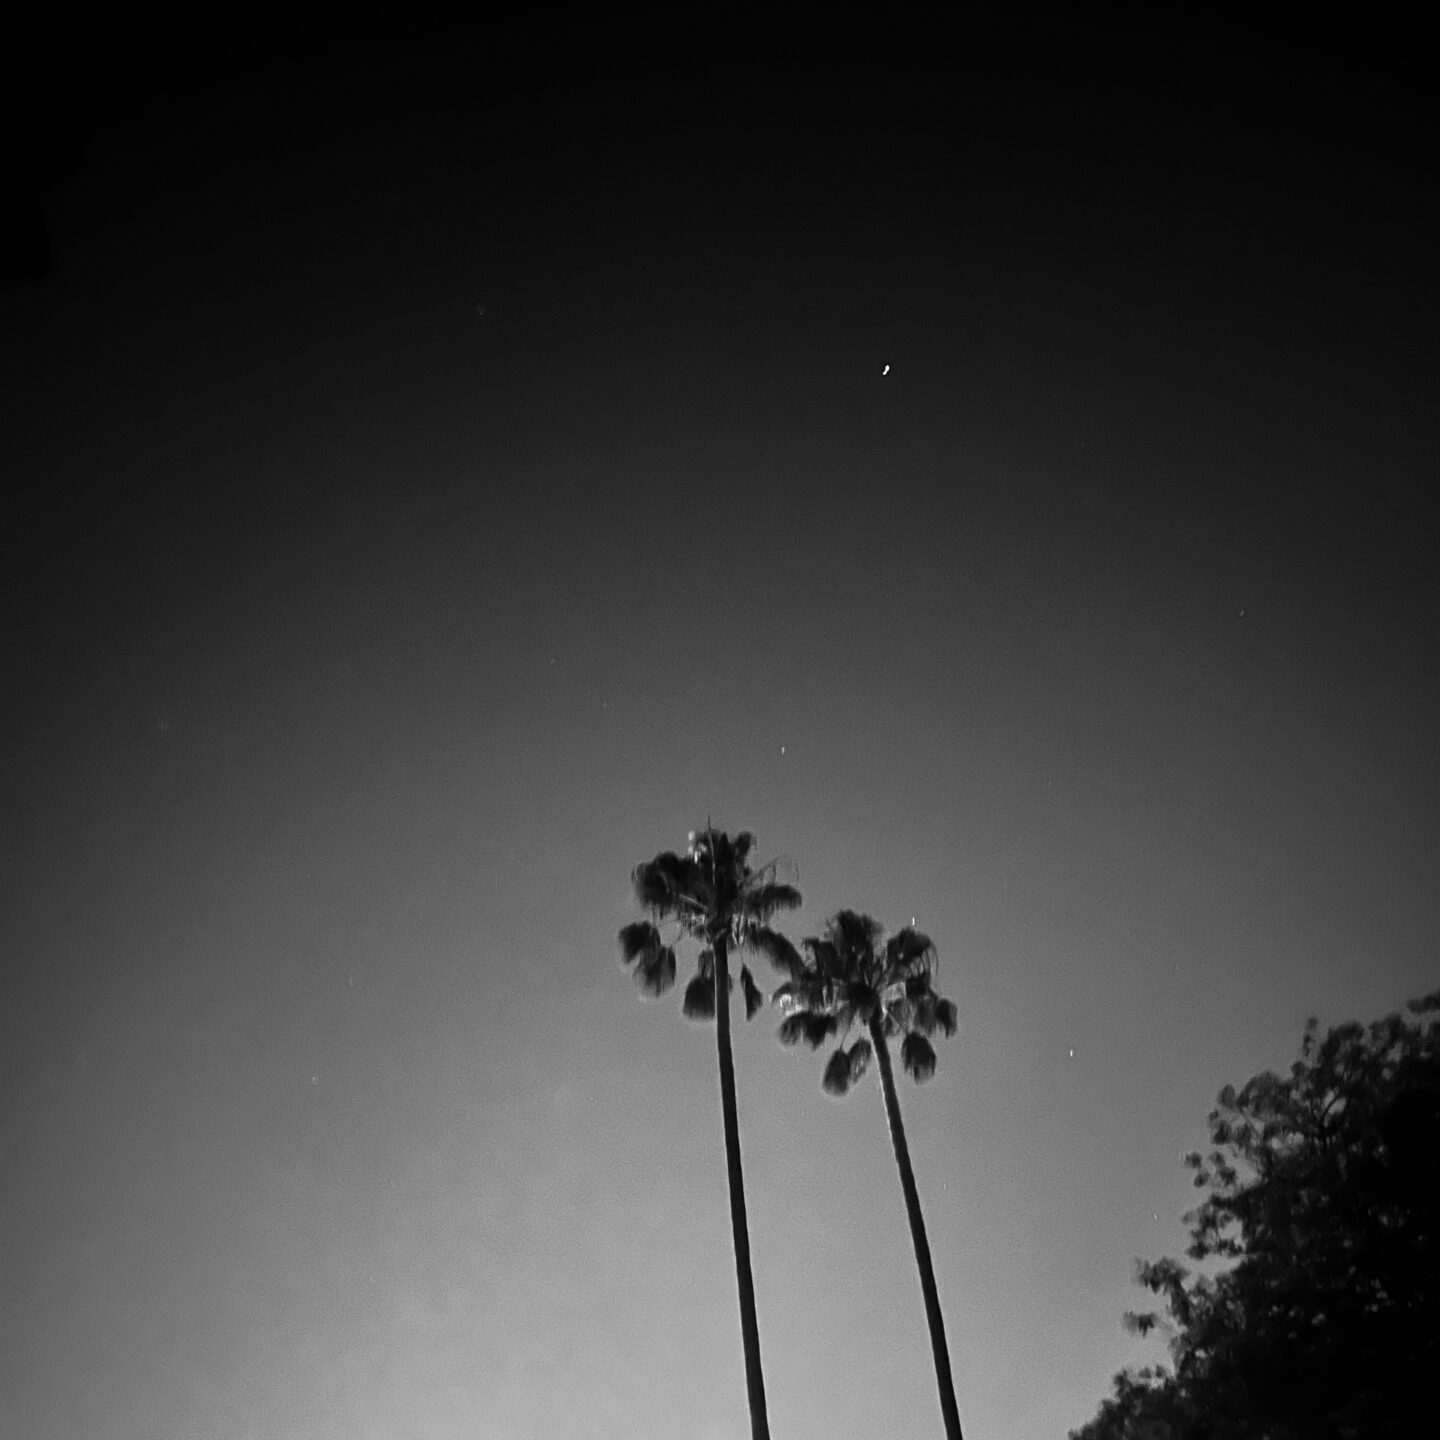 Planet and Palms, Sherman Oaks, California (2 photos) [Photography]